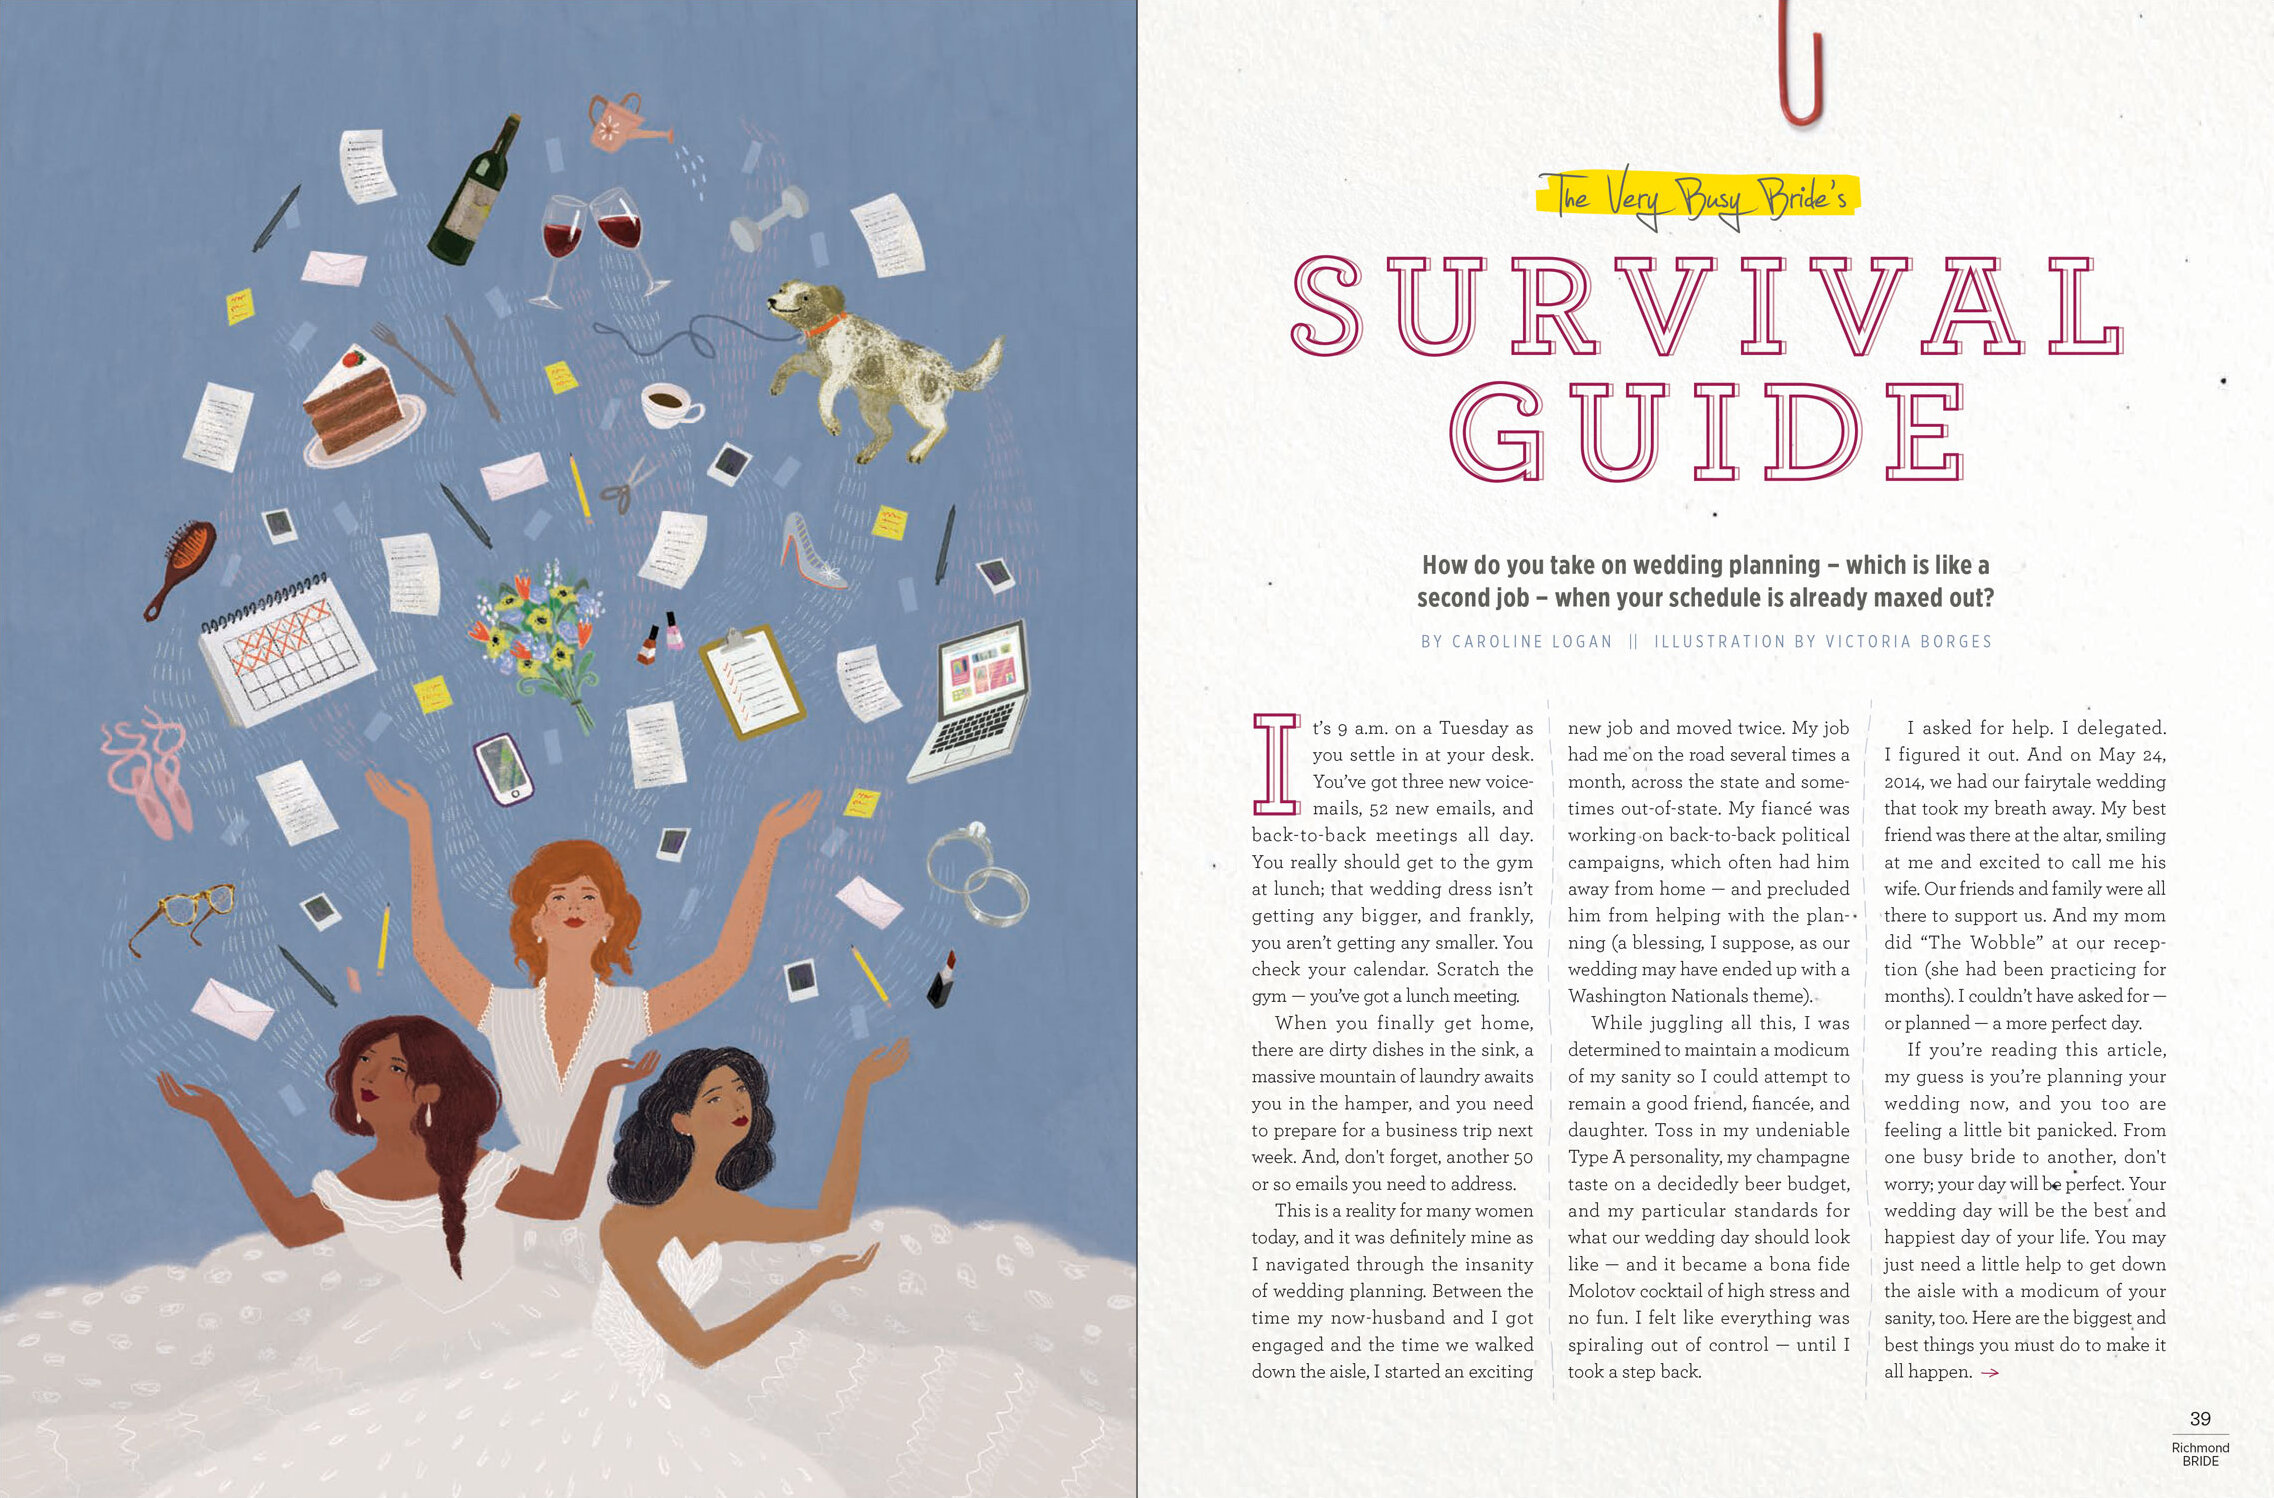 Bridal-survival-guide-editorial-design-1.jpg